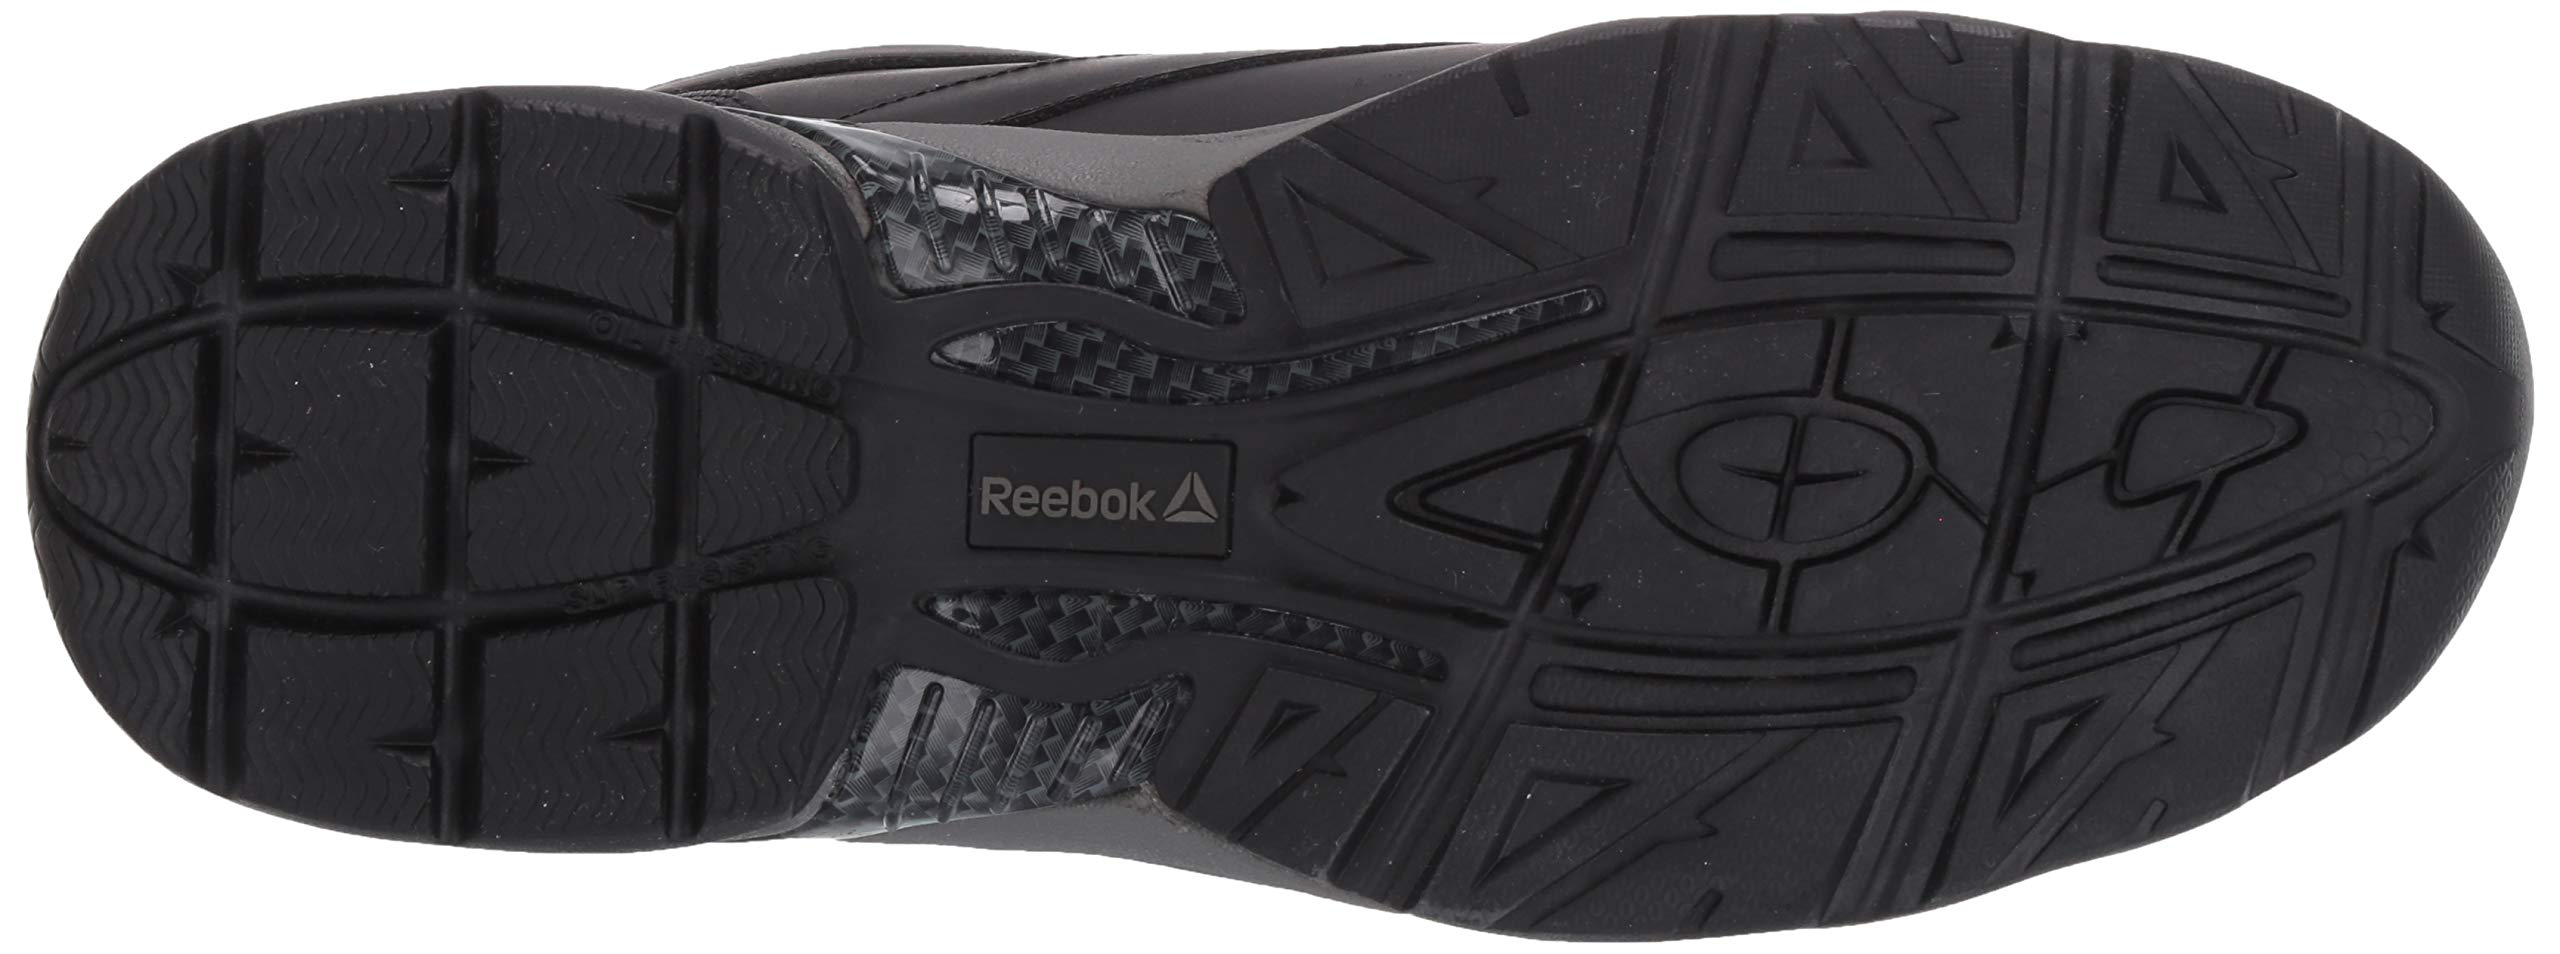 Reebok Work Men's Beamer RB1067 Work Shoe, Black